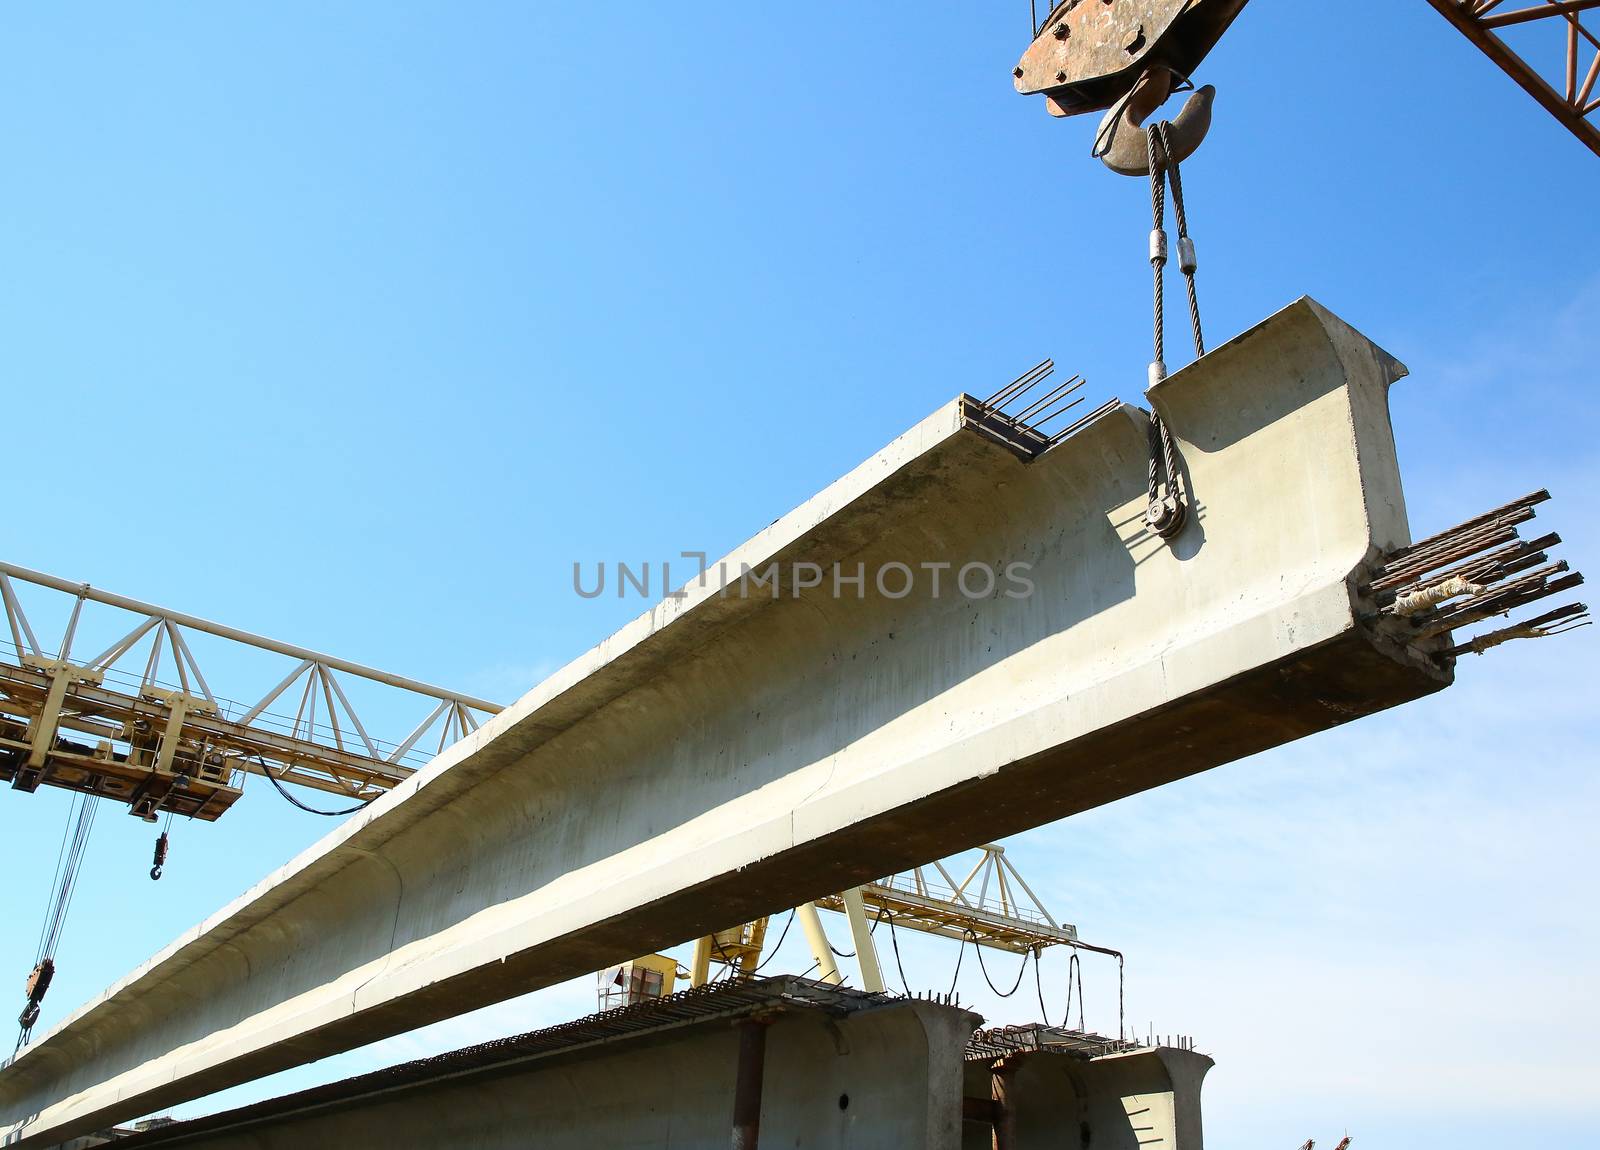 the concrete structure raise the crane on blue sky background by sergasx